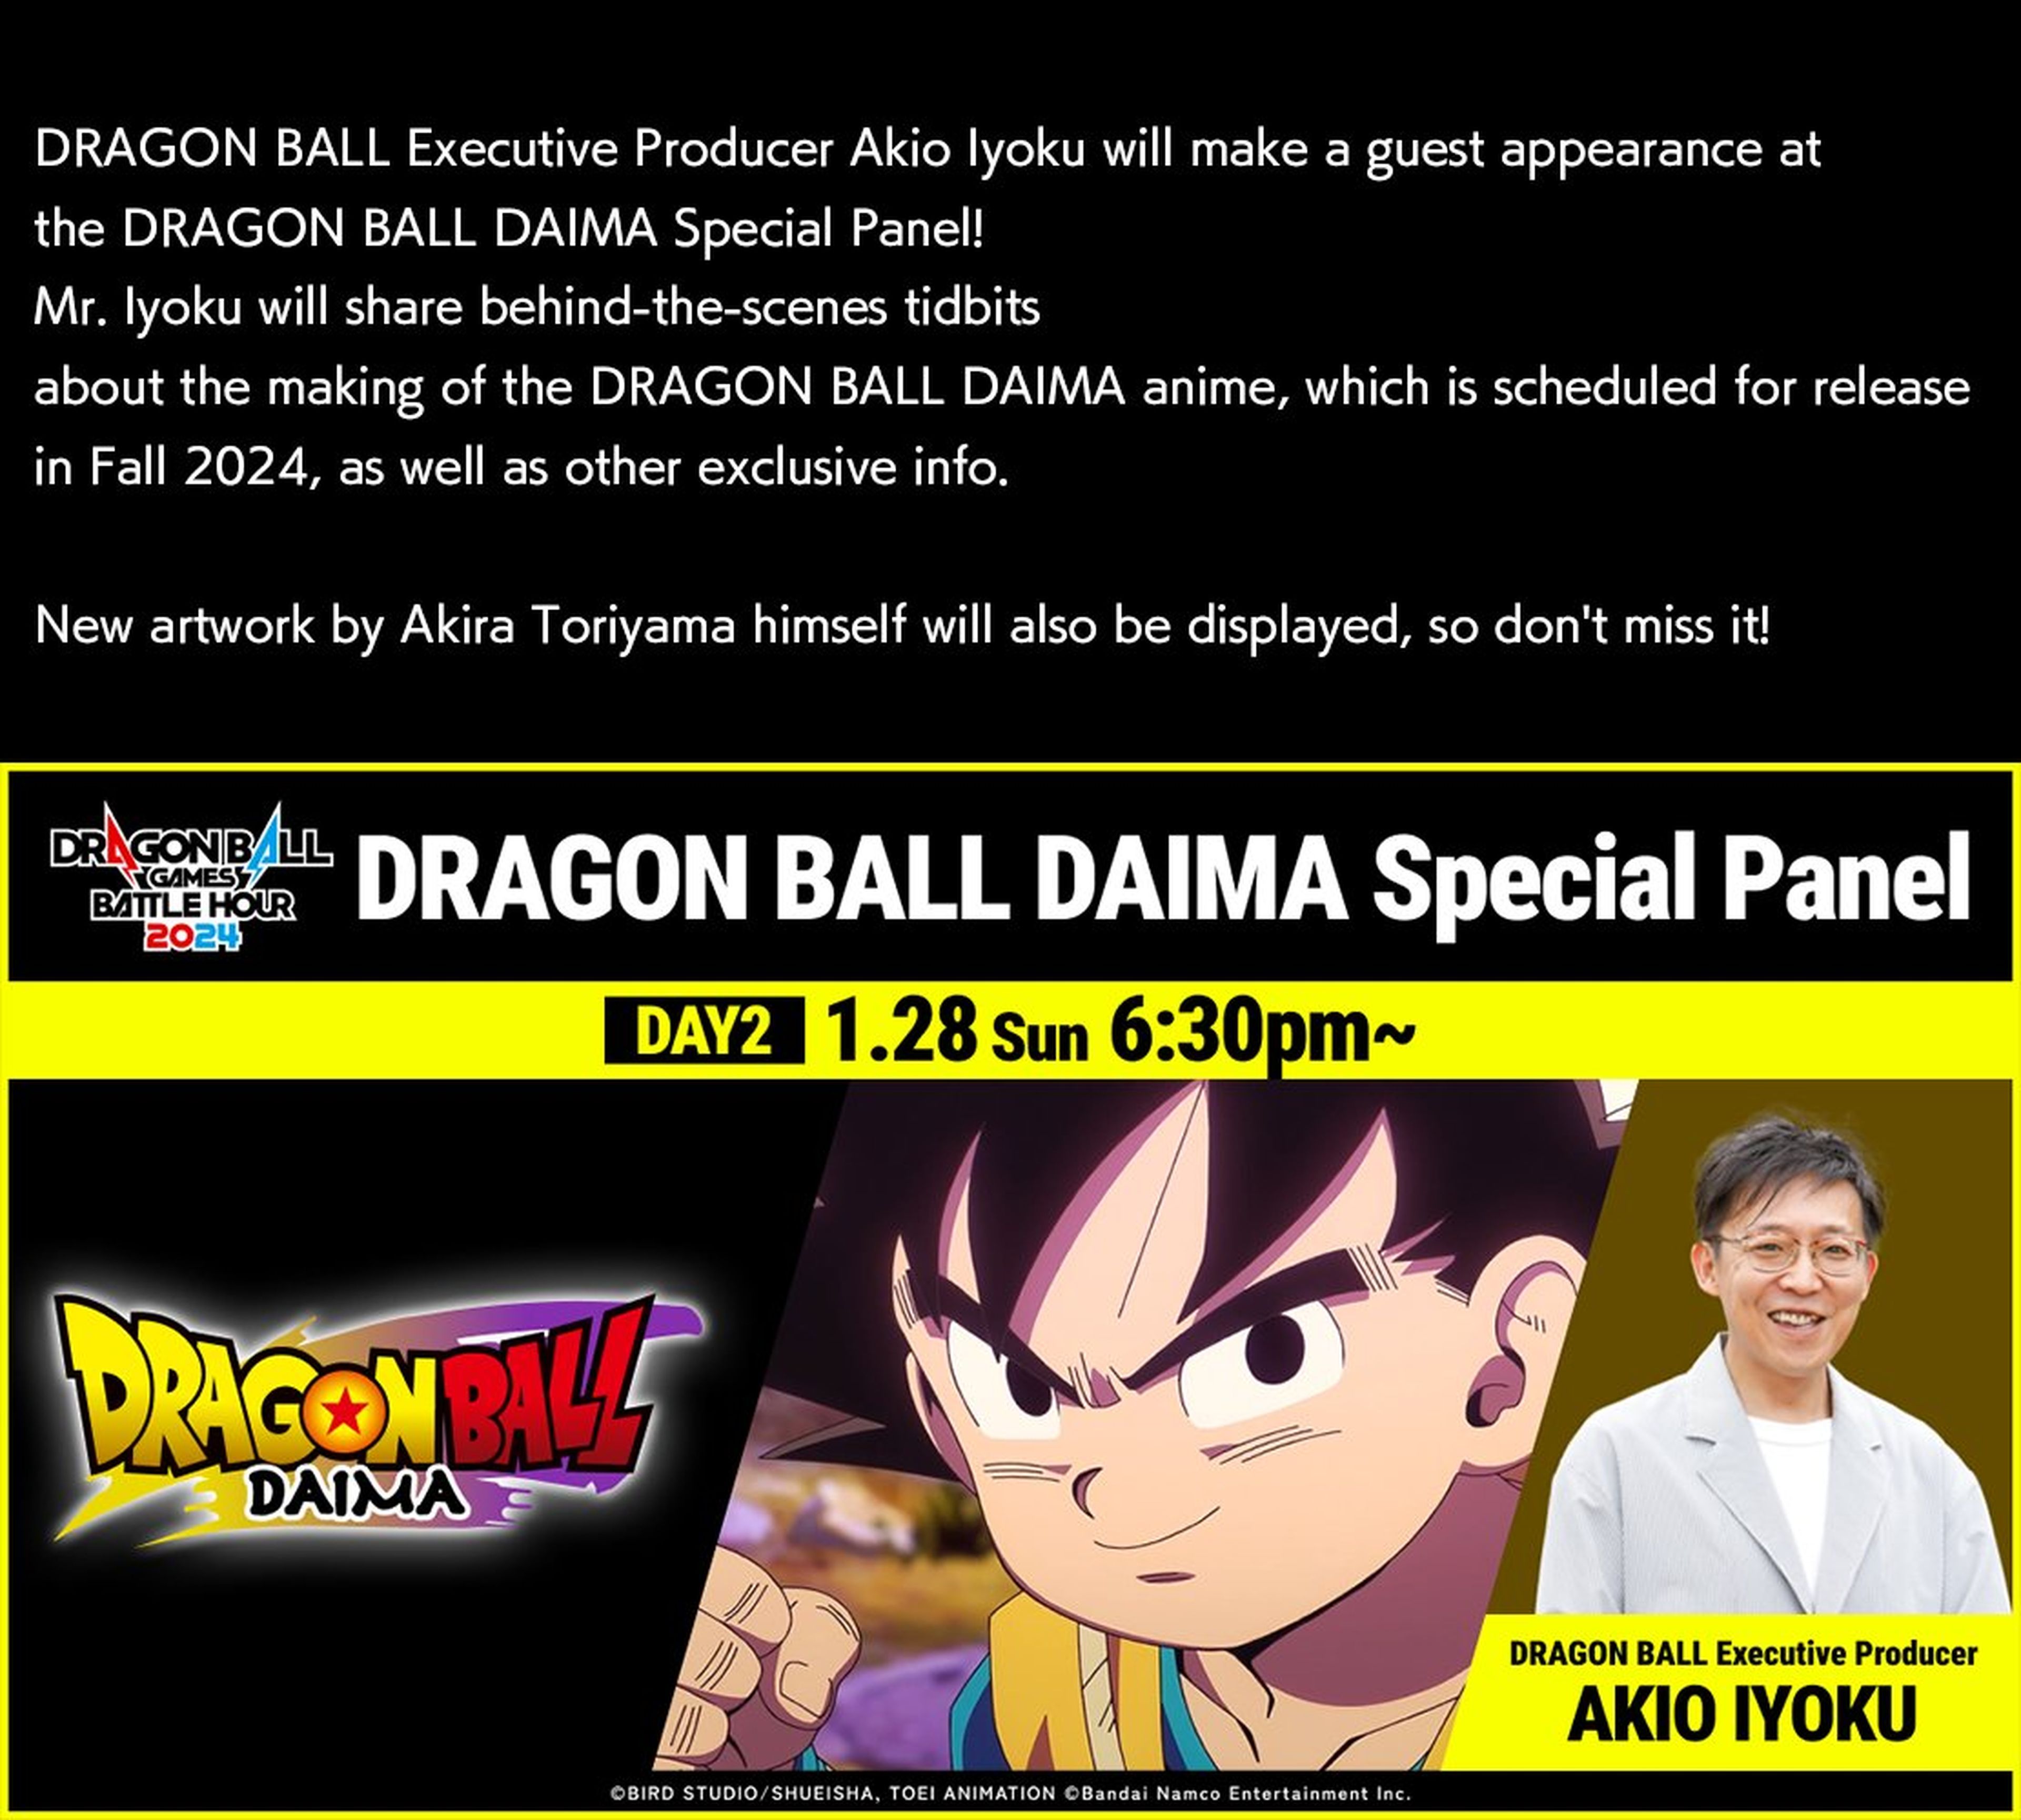 Dragon Ball Daima - La fecha oficial en la que se desvelarán más secretos de la nueva serie anime de Akira Toriyama